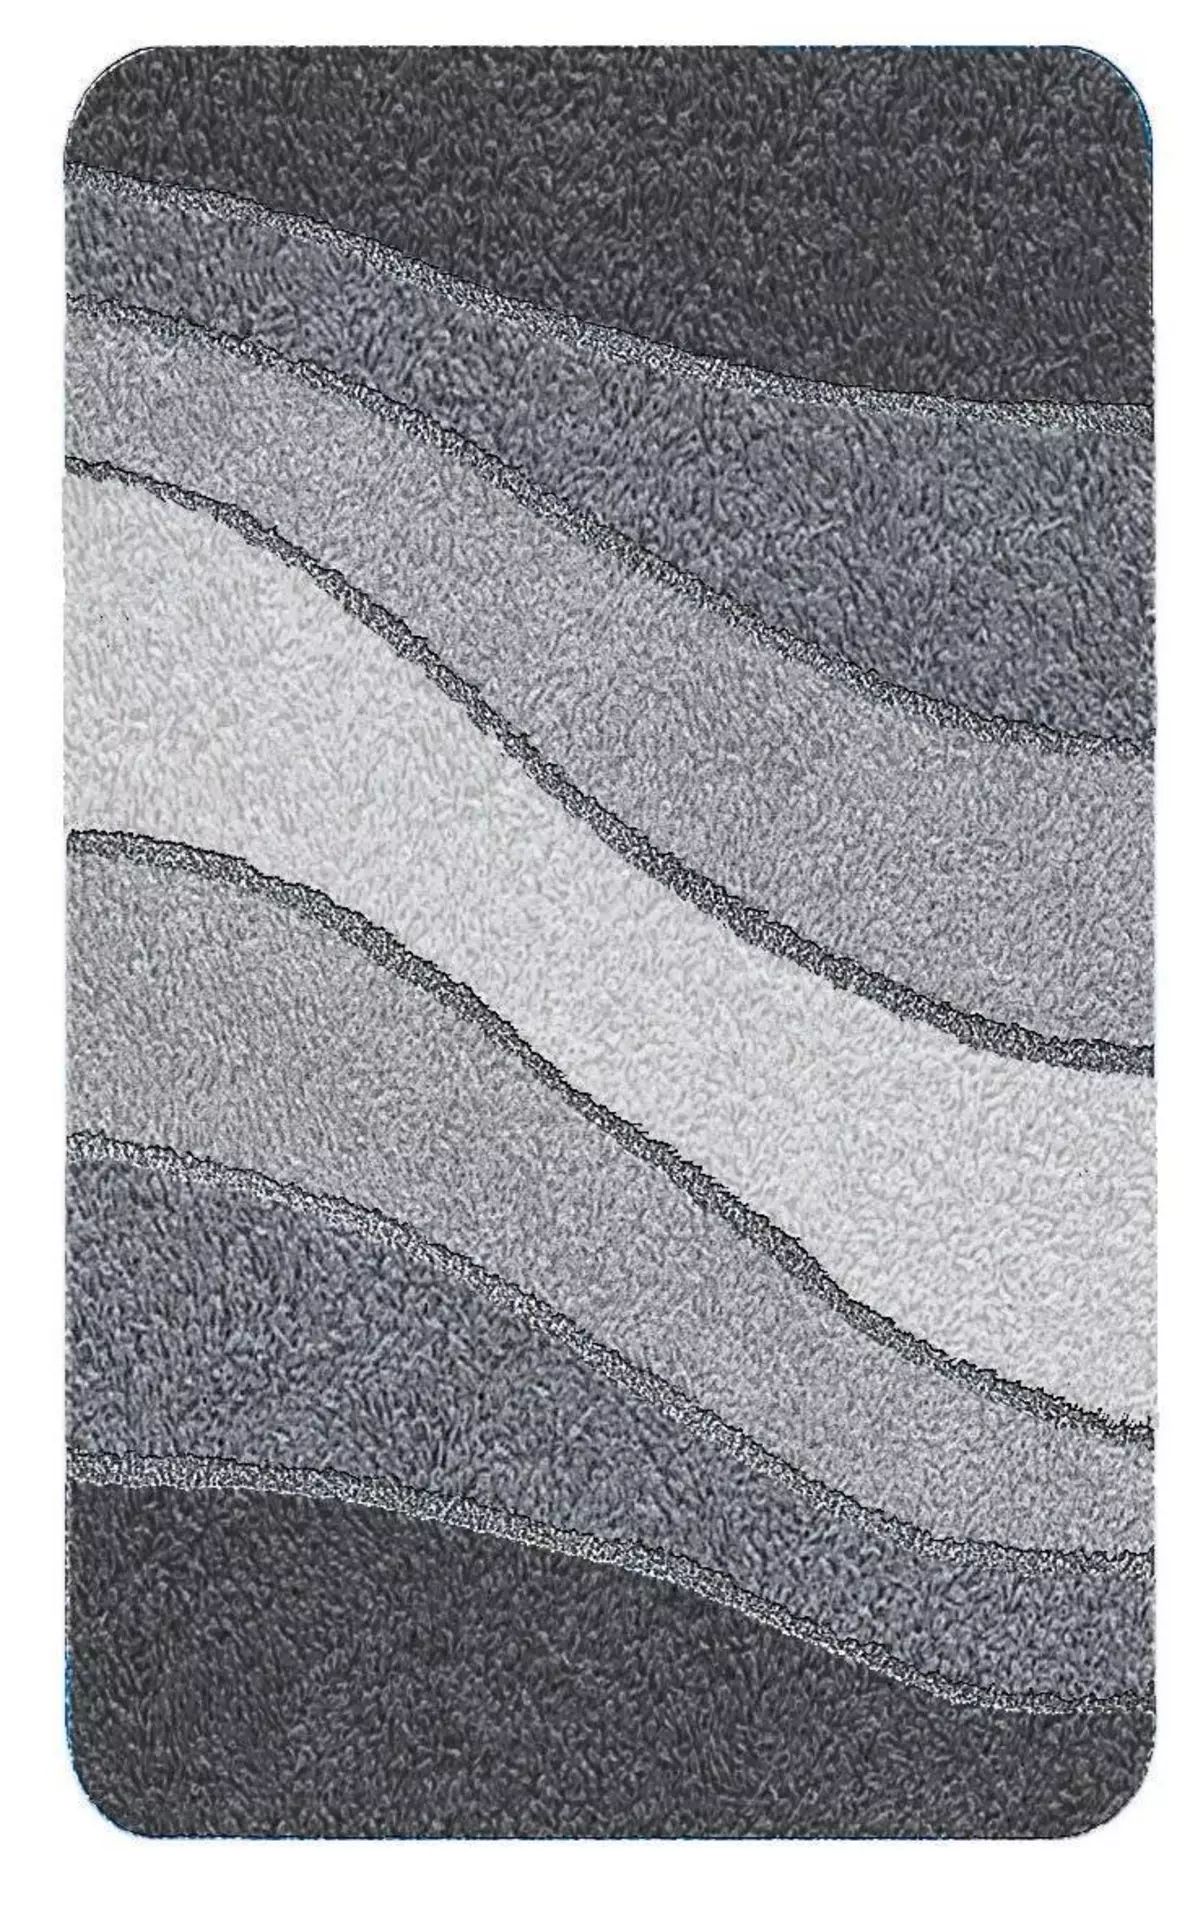 WC-Vorleger Ocean Meusch Textil 50 x 2 x 55 cm